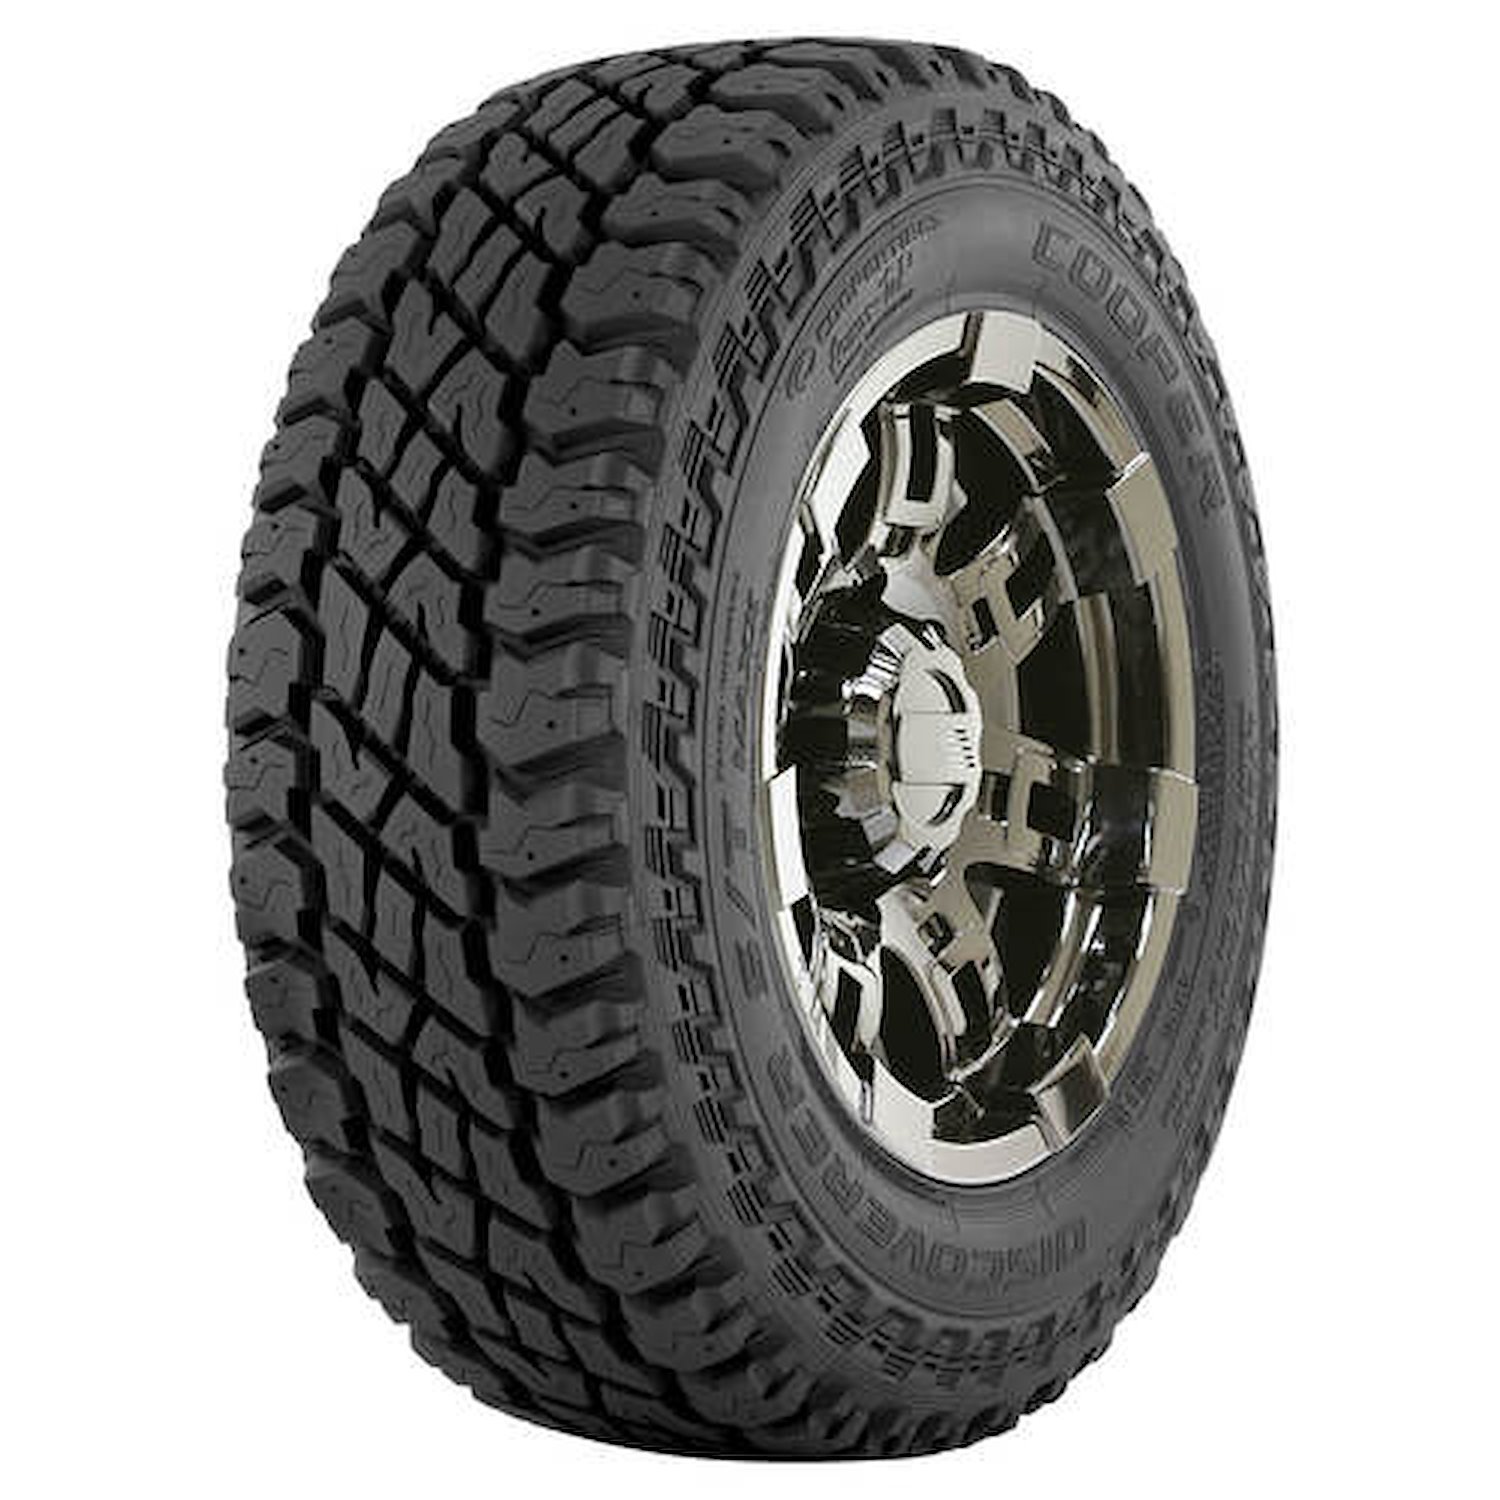 Discoverer S/T Maxx All-Terrain Tire, LT245/70R17